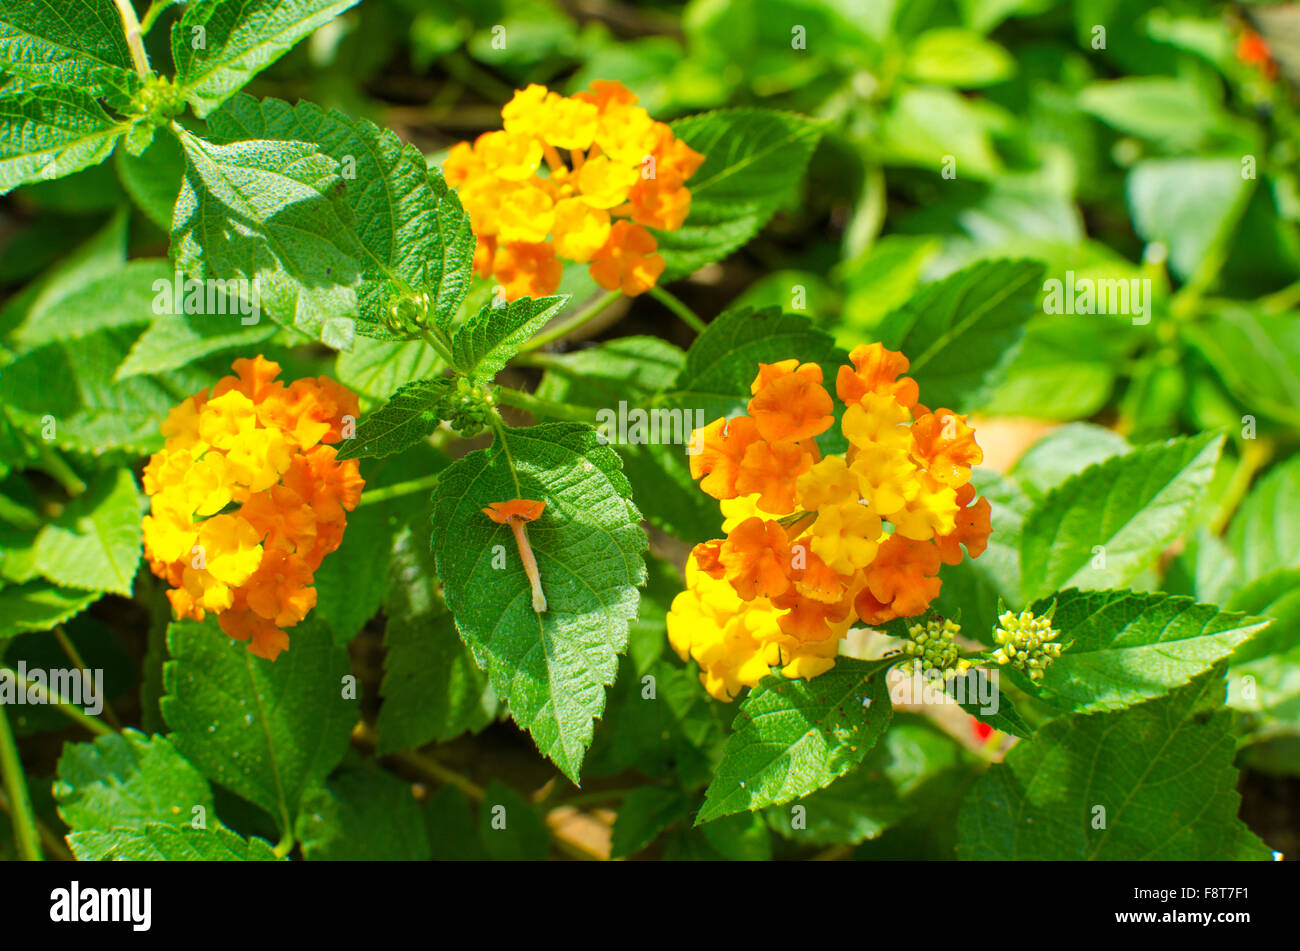 Lanthanum flowers sort of family Verbena, tropical plants, tropics, flowers, yellow and orange flowers, fauna of India Stock Photo